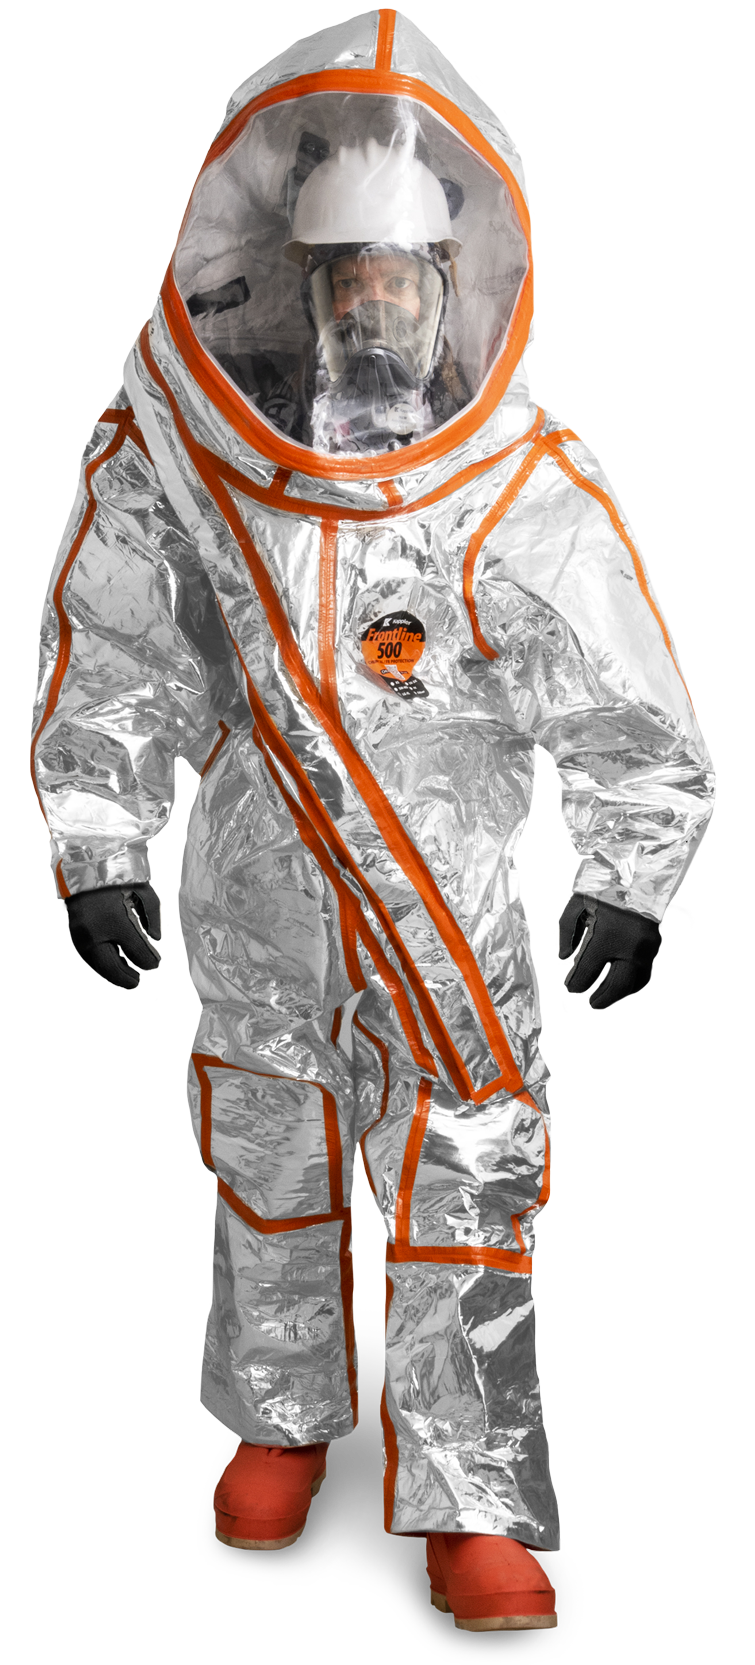 Frontline 500 vapor total encapsulating suit with expanded view antifog visor system